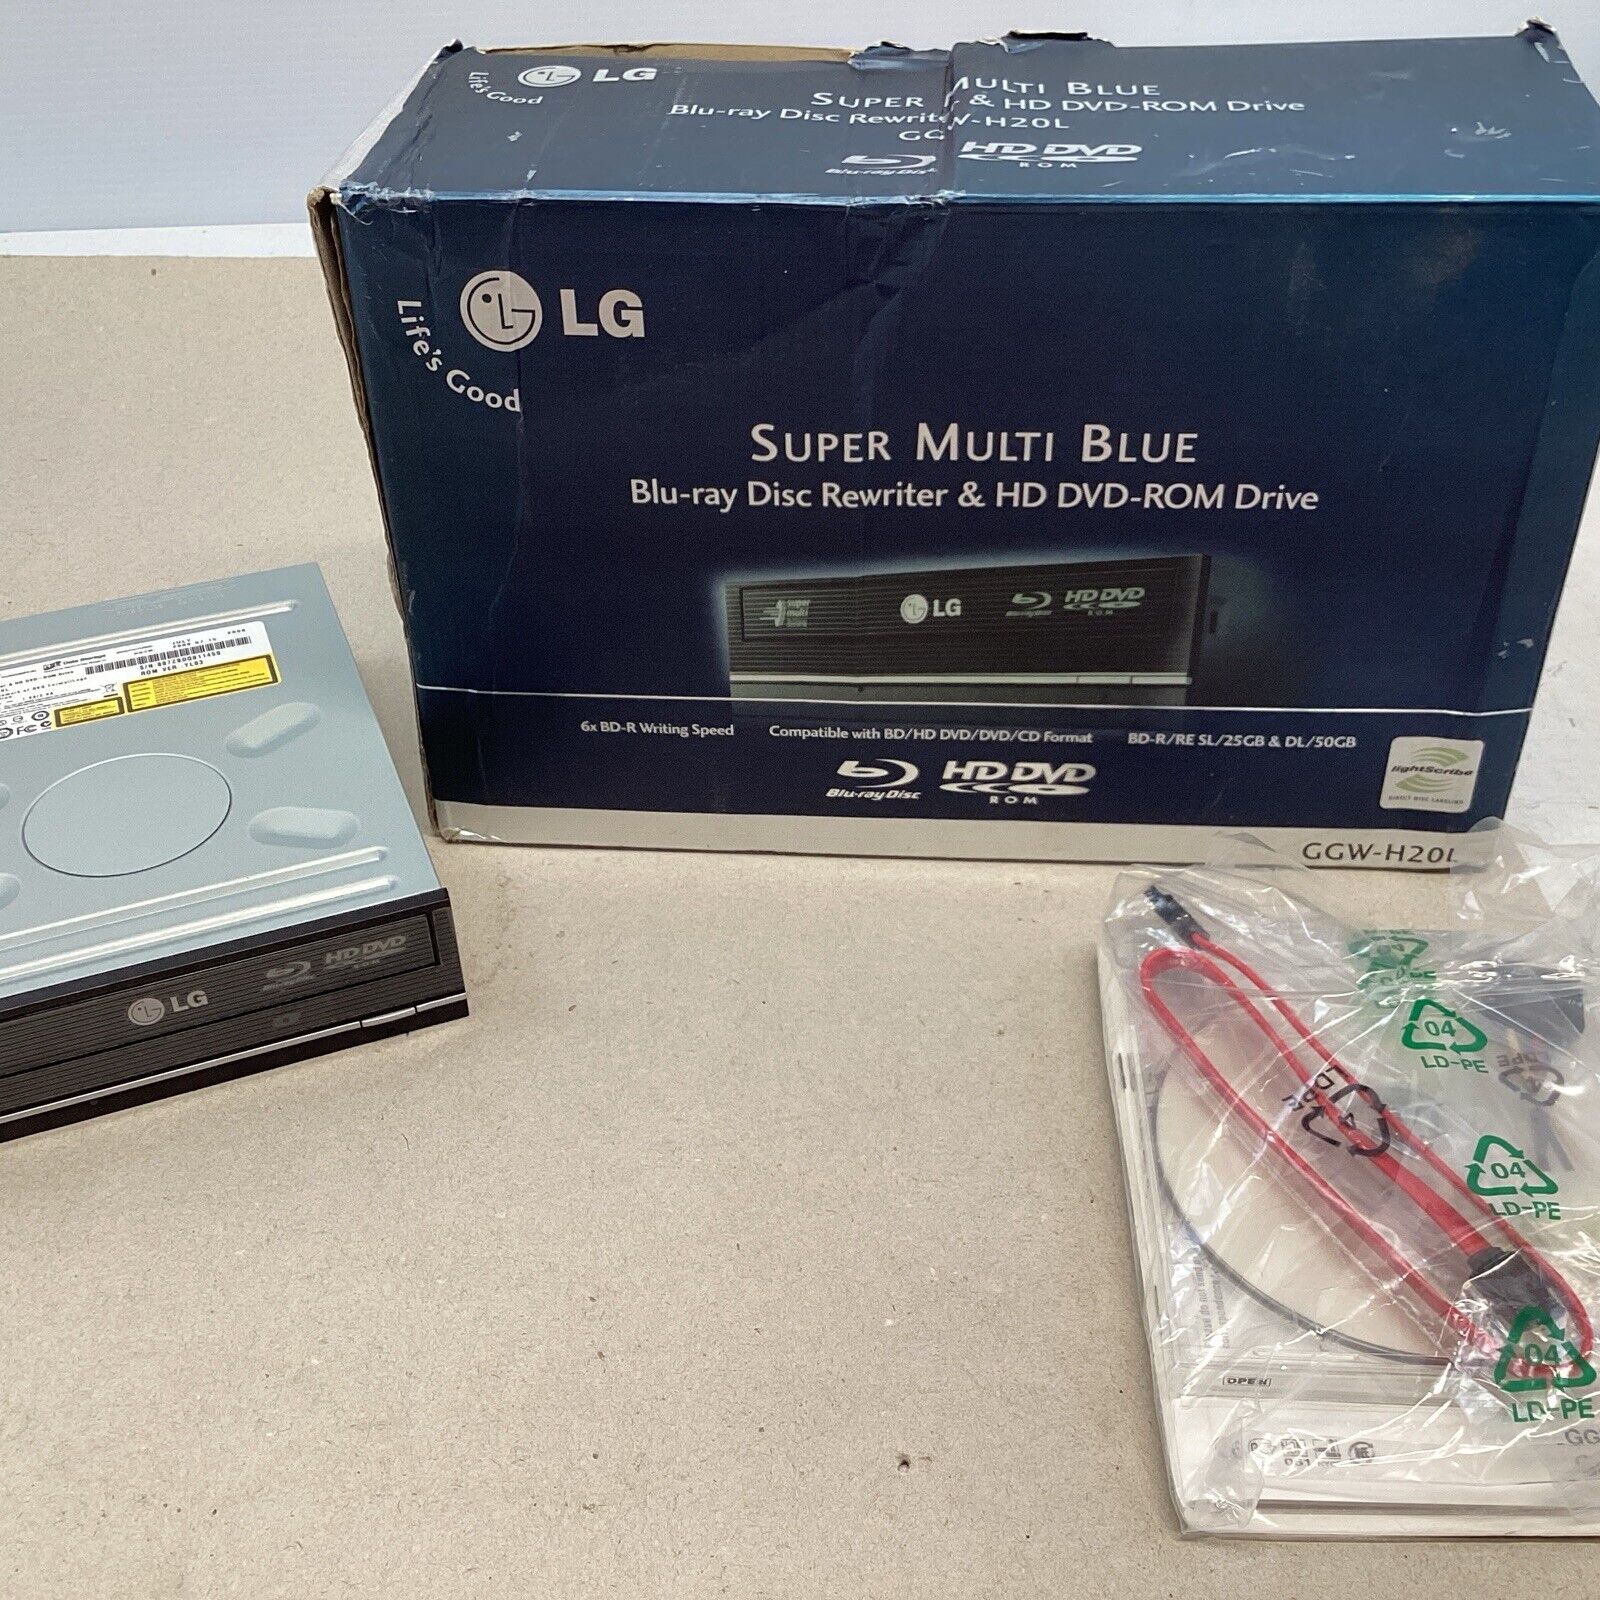 LG GGW-H20L Super Multi Blue Blu-Ray Disc Rewriter And HD DVD-ROM Drive